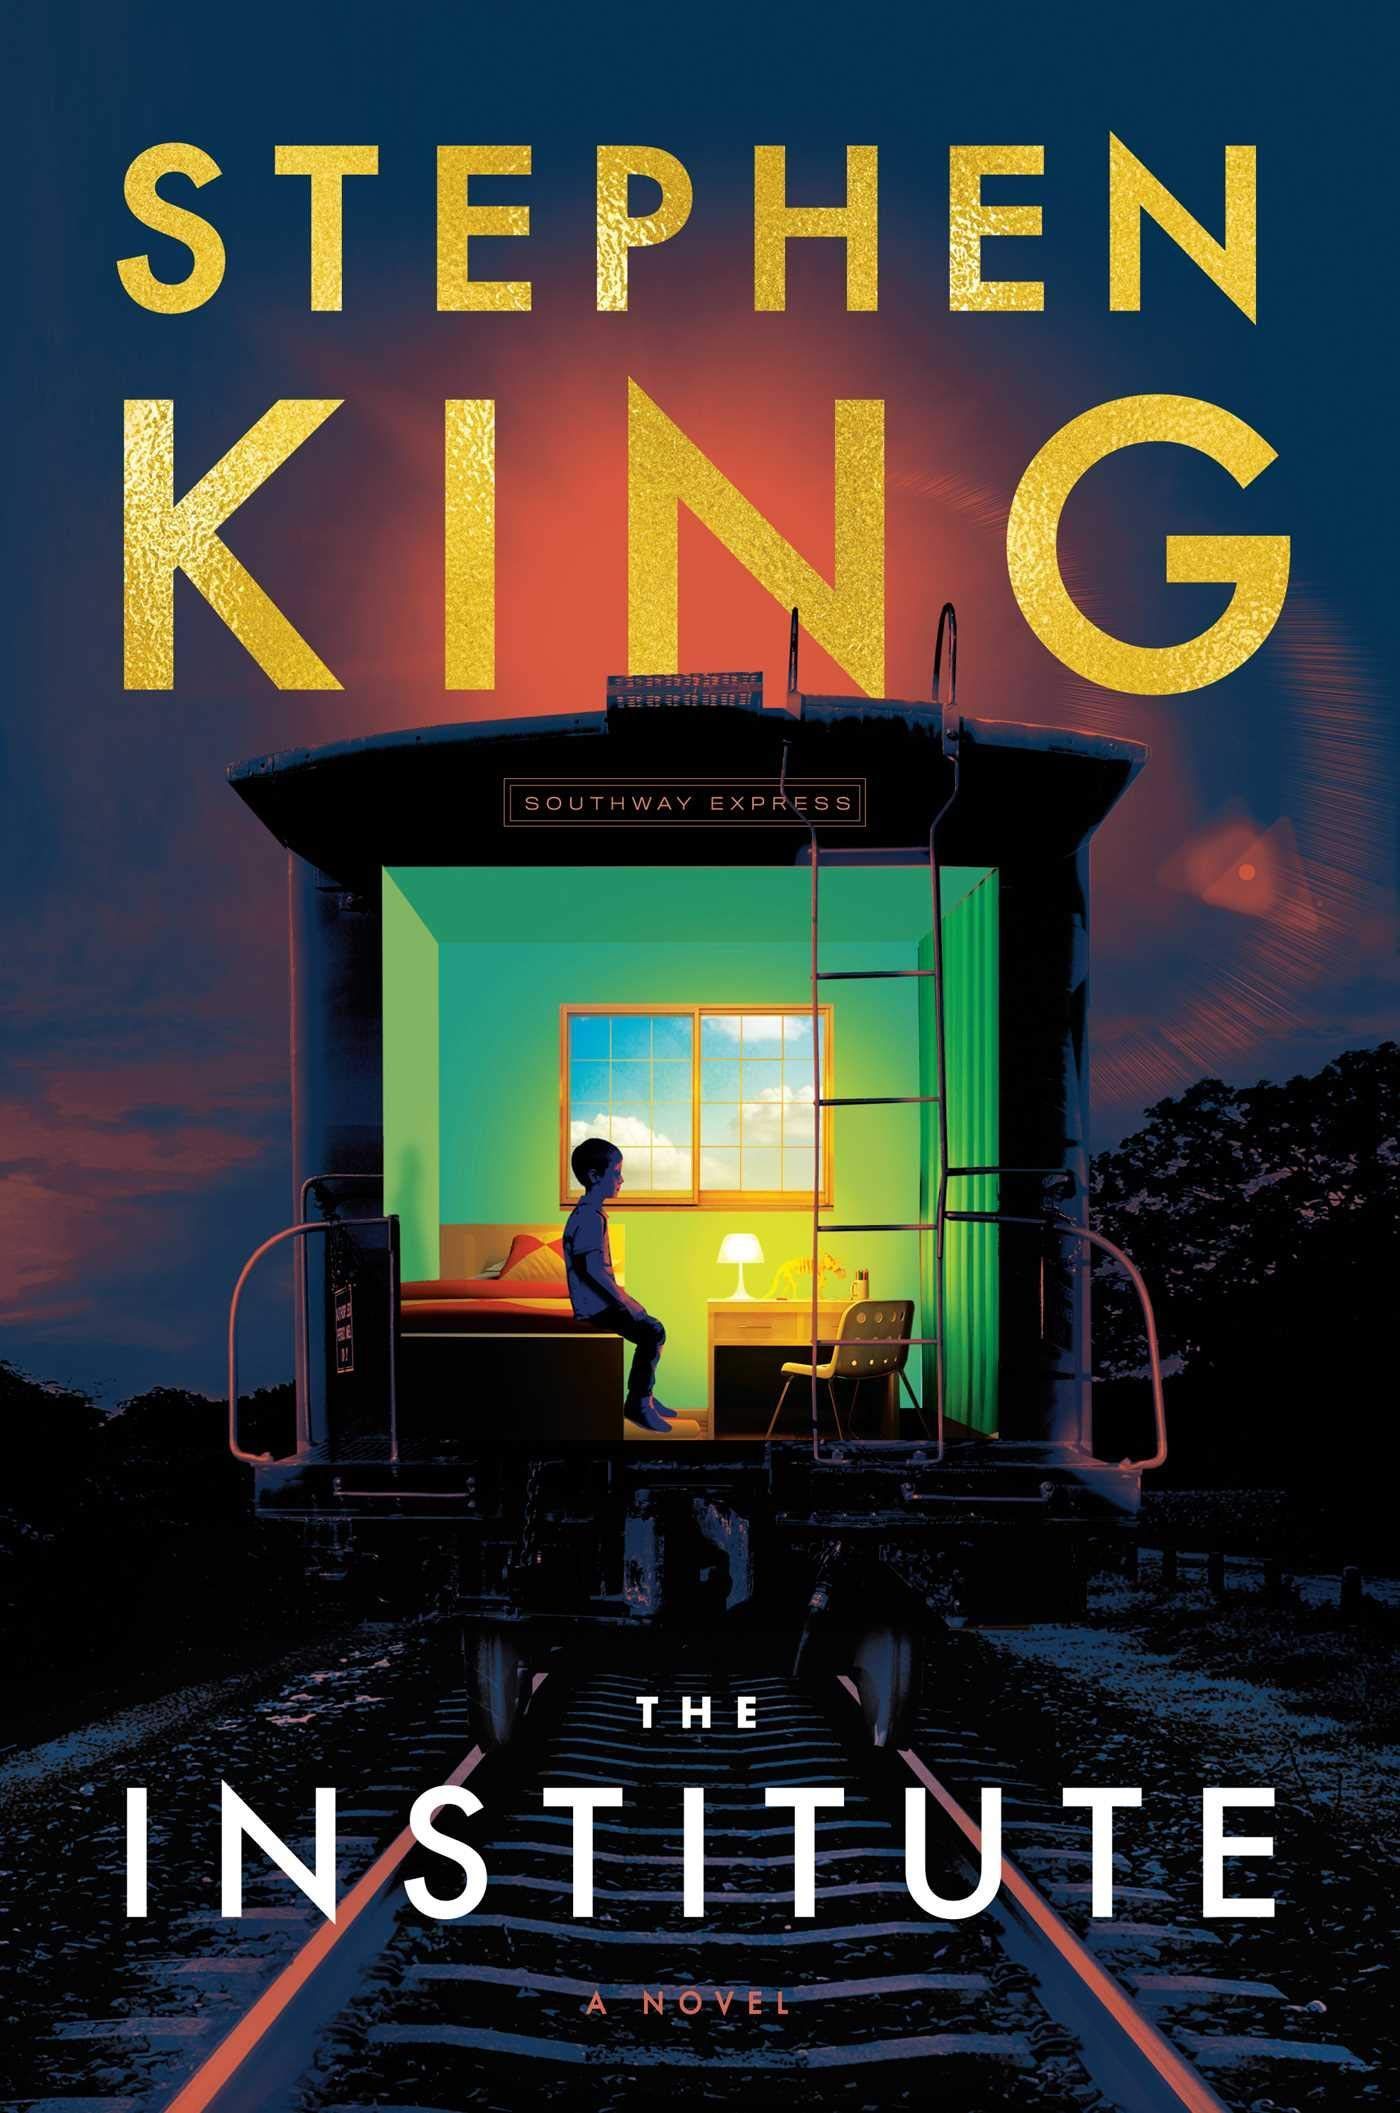 Déjà vu Destroyed: On Stephen King’s “The Institute”